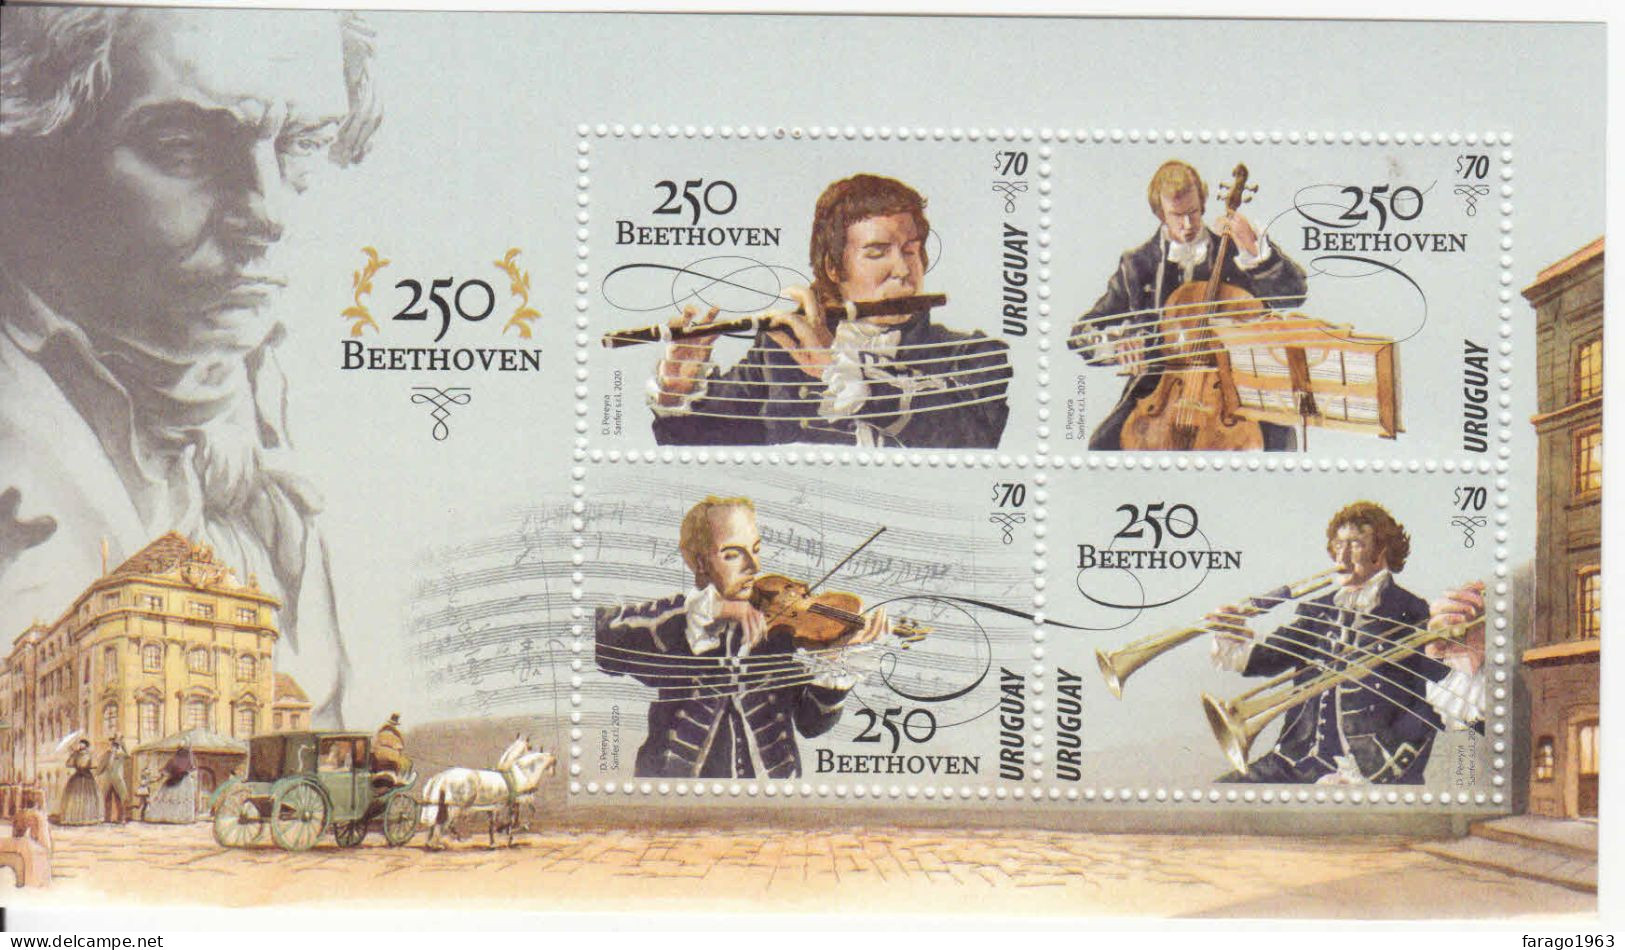 2020 Uruguay Beethoven Music Composer Souvenir Sheet MNH - Uruguay